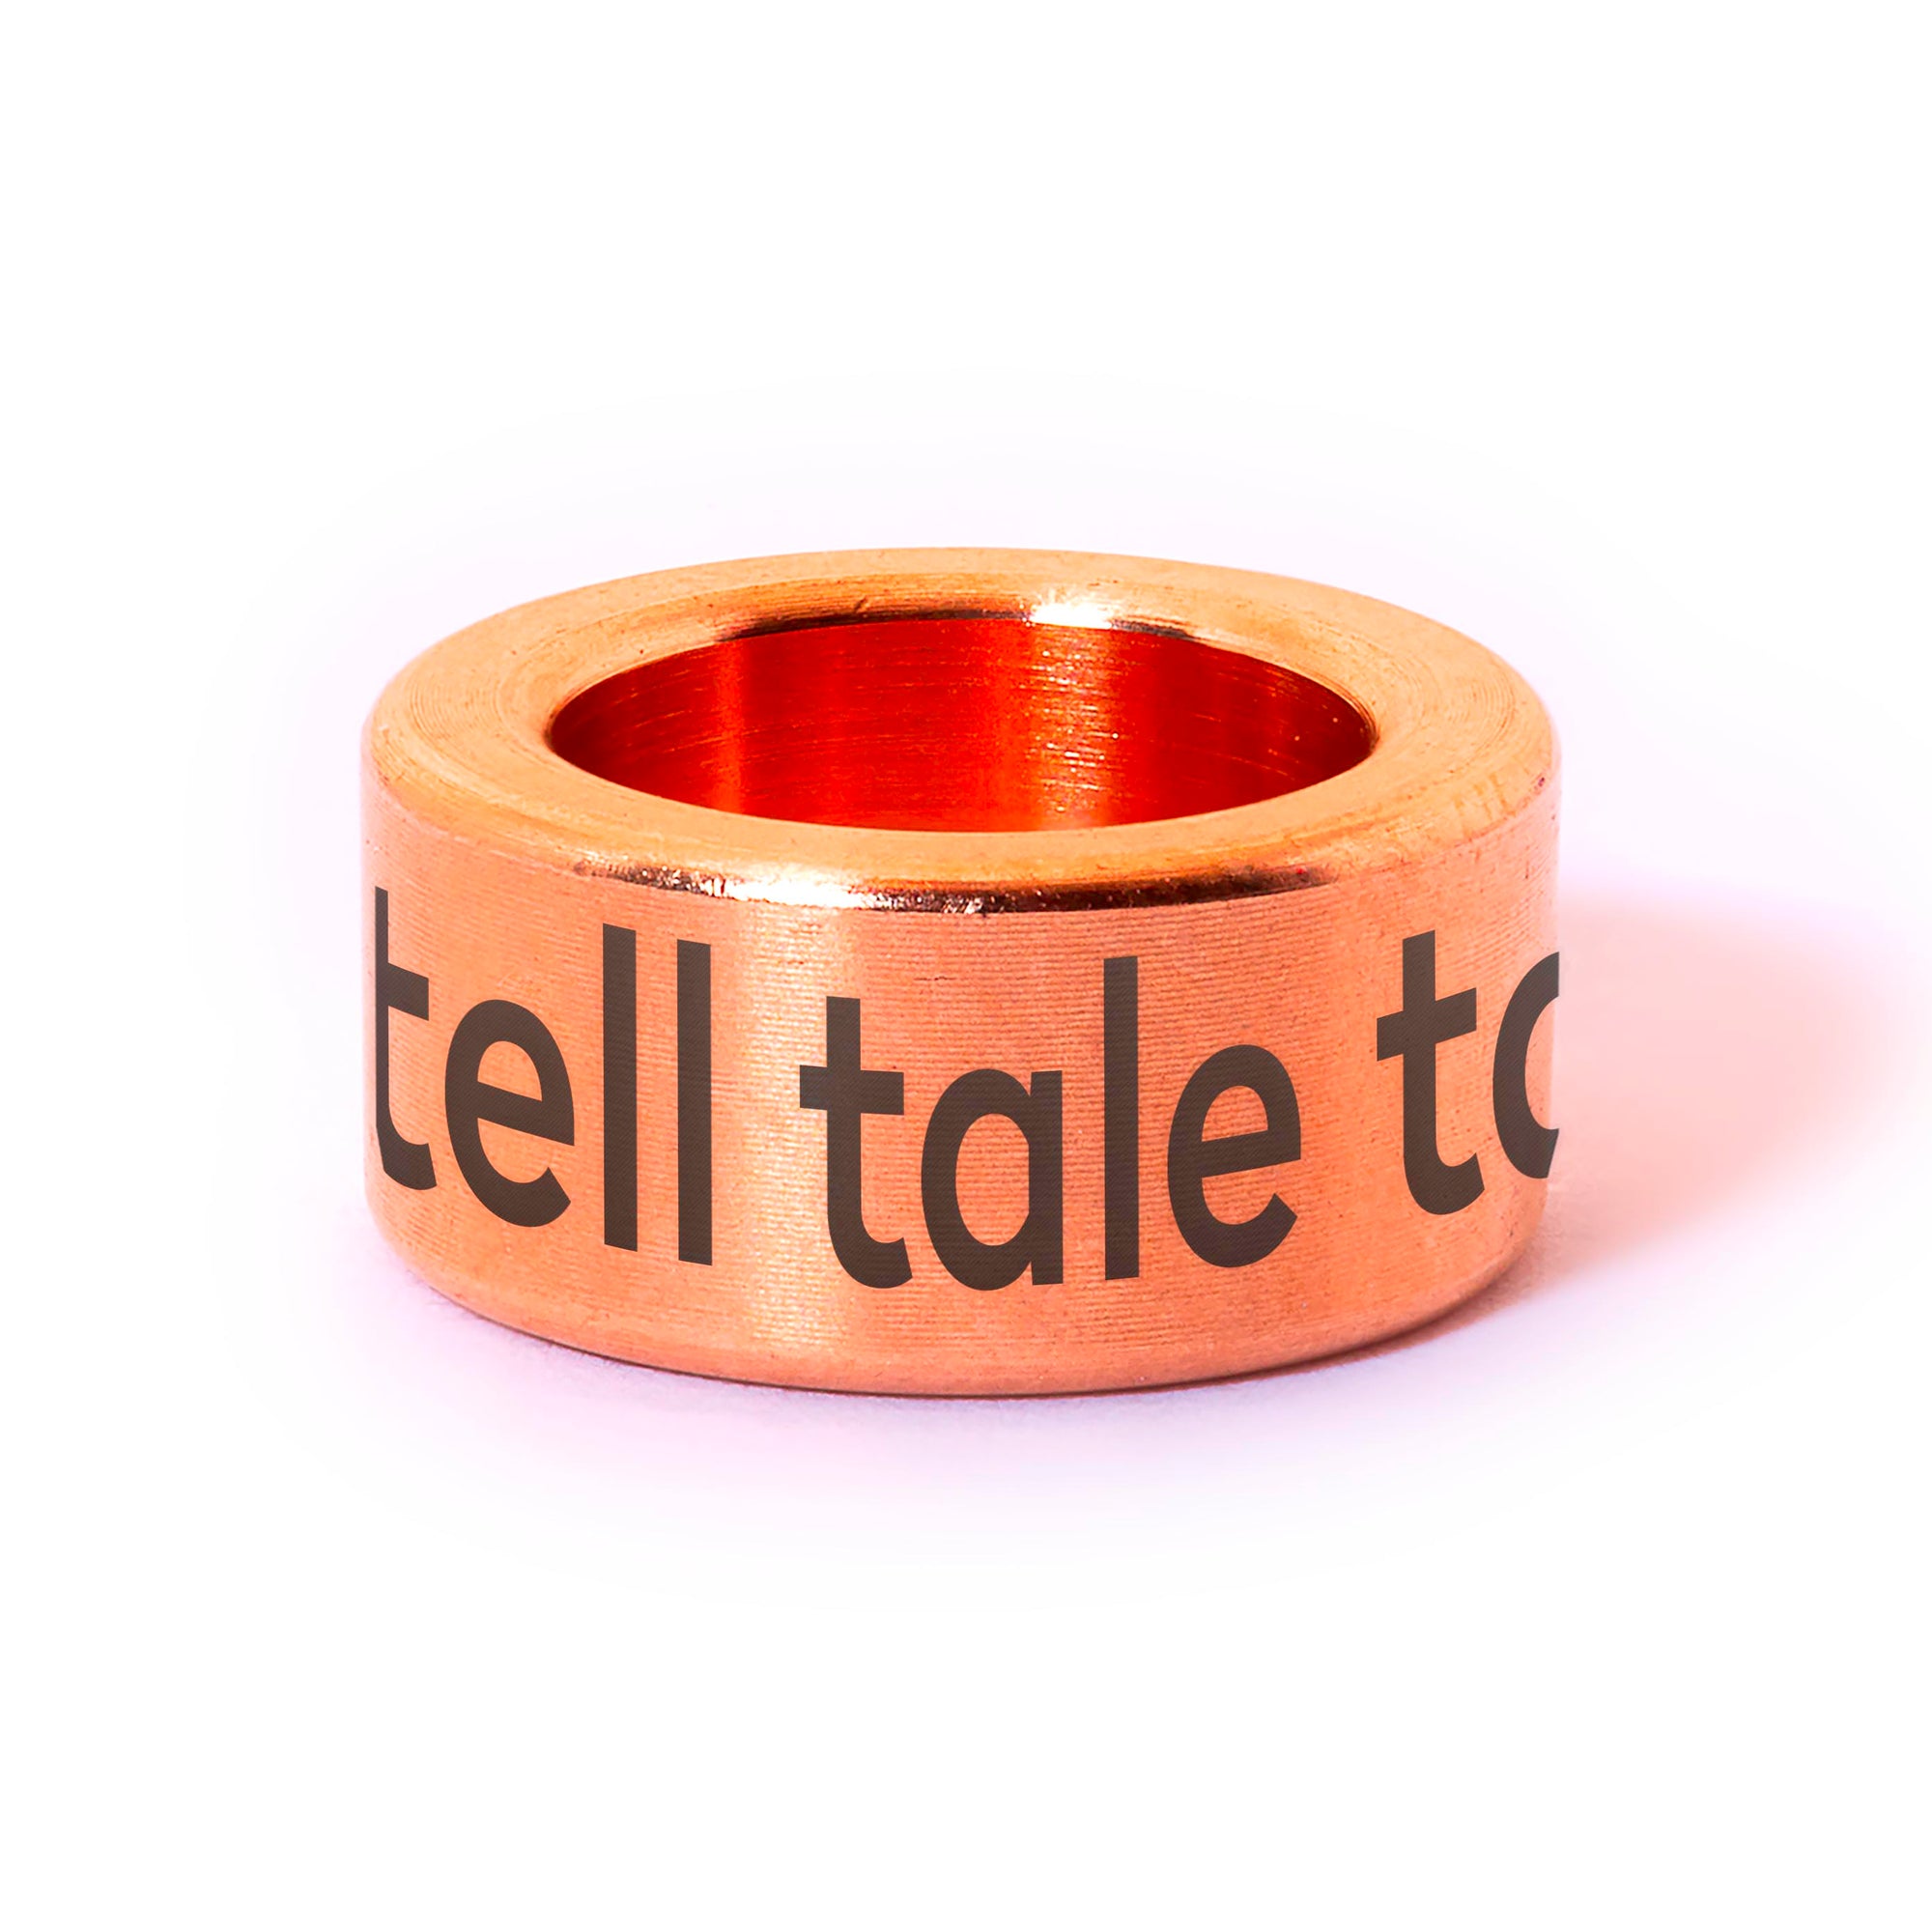 Tell tale tail Notch